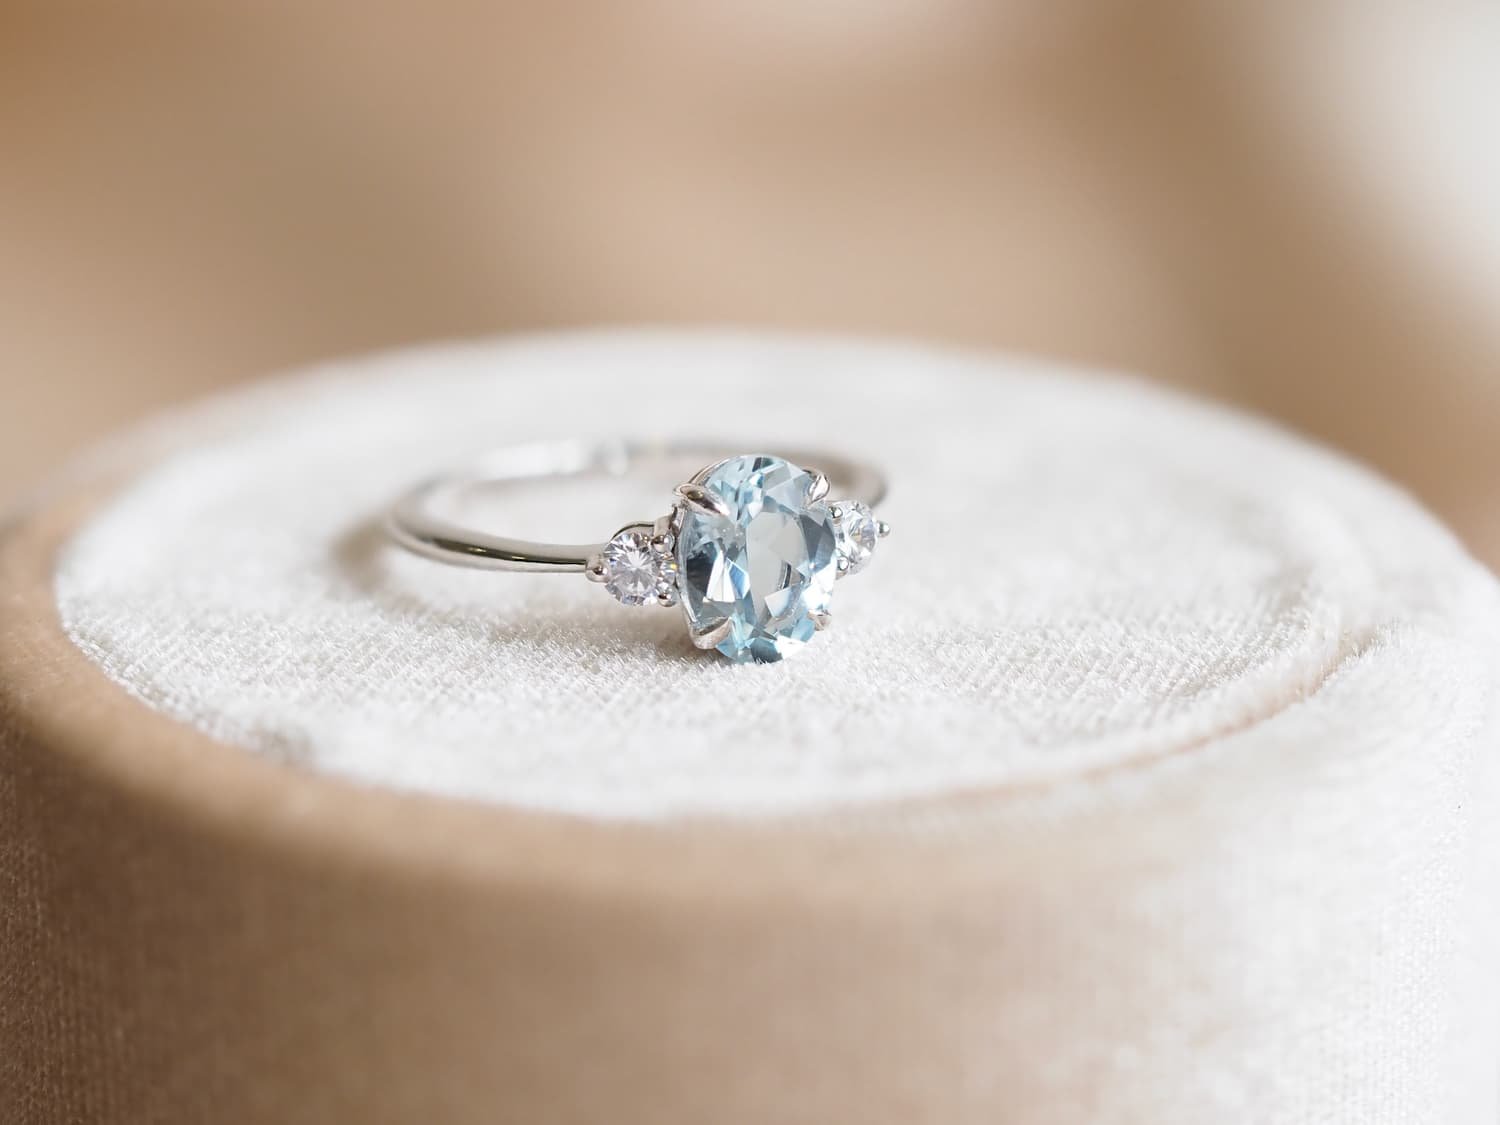 10k White Gold 1.75 Carat Oval Cut Aquamarine Engagement Rings With Twisted  Wedding Band Diamonds Halo Design - Walmart.com